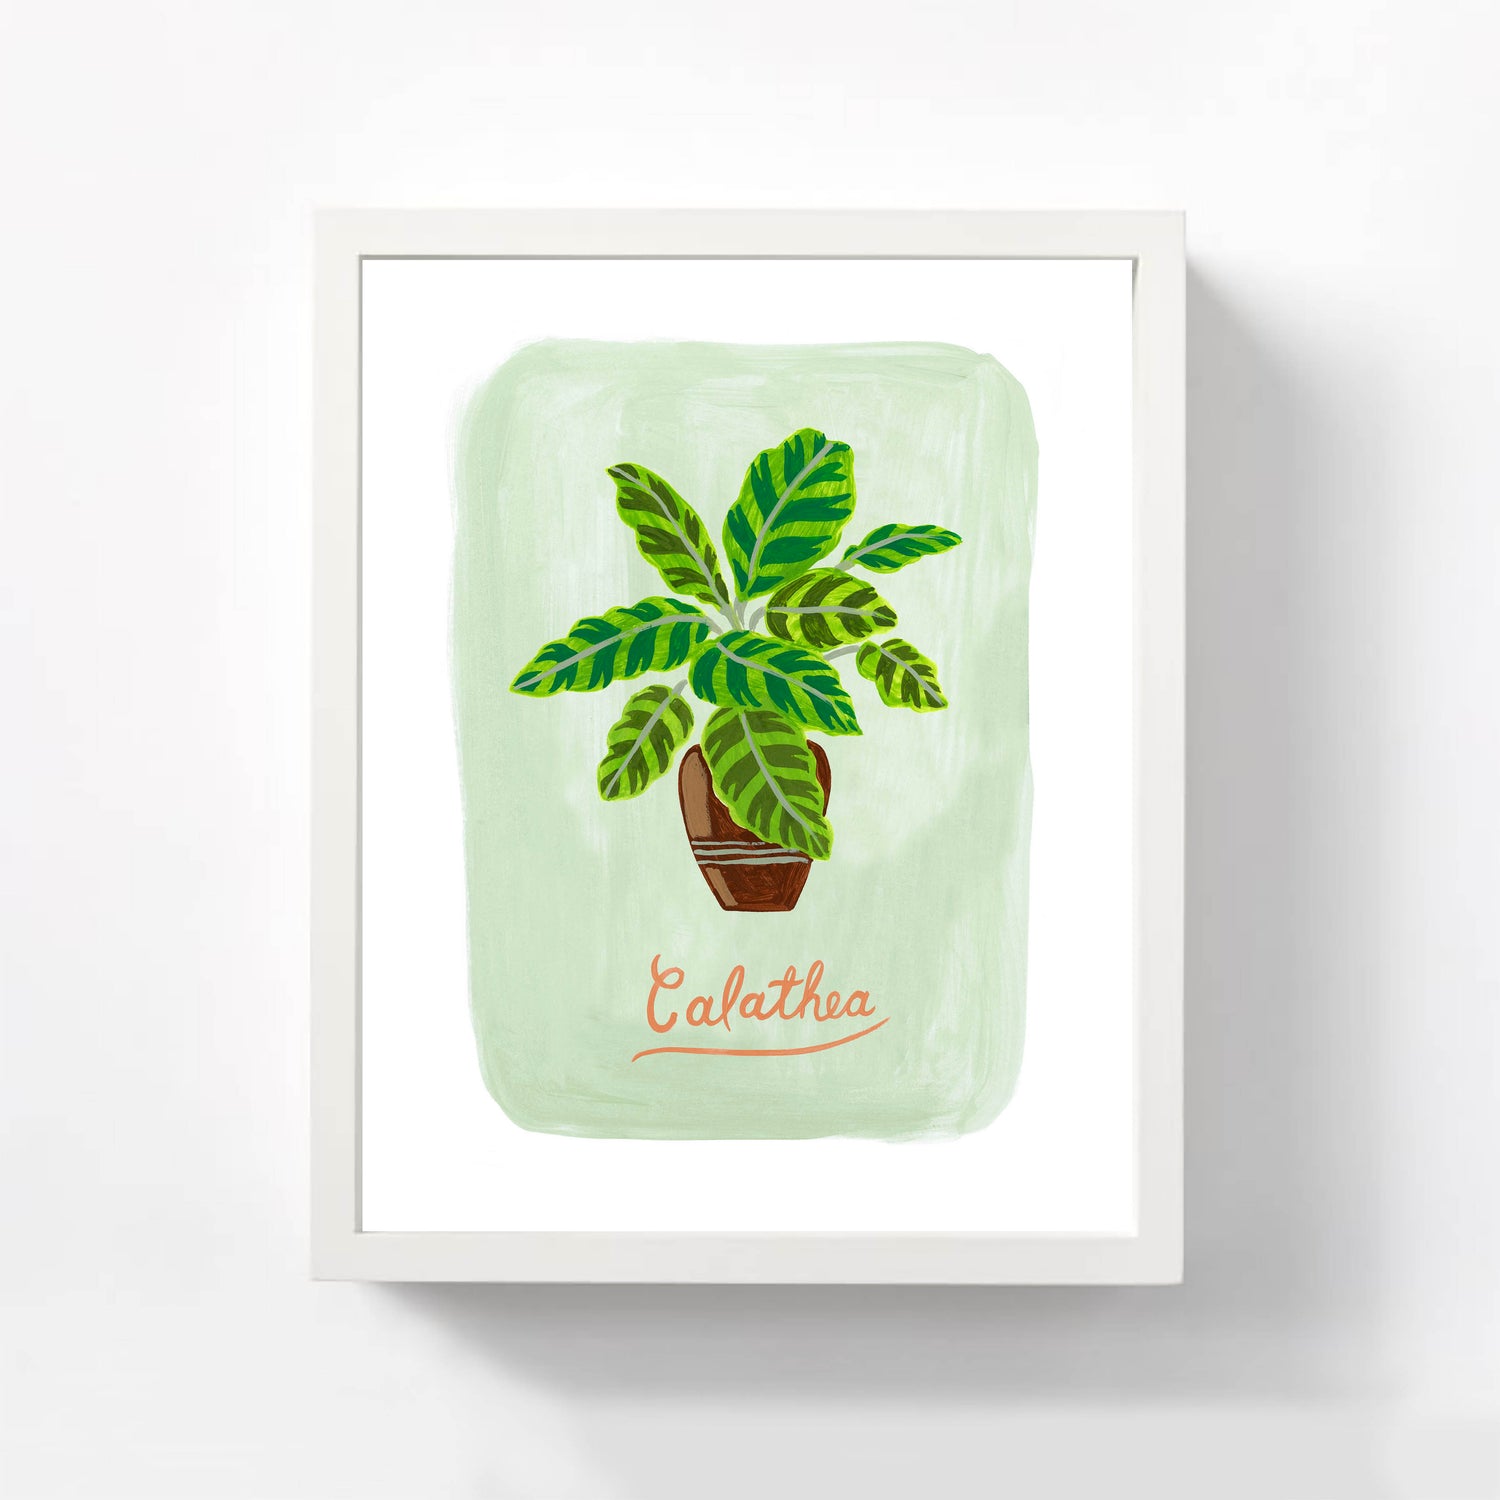 Calathea plant illustration in white frame